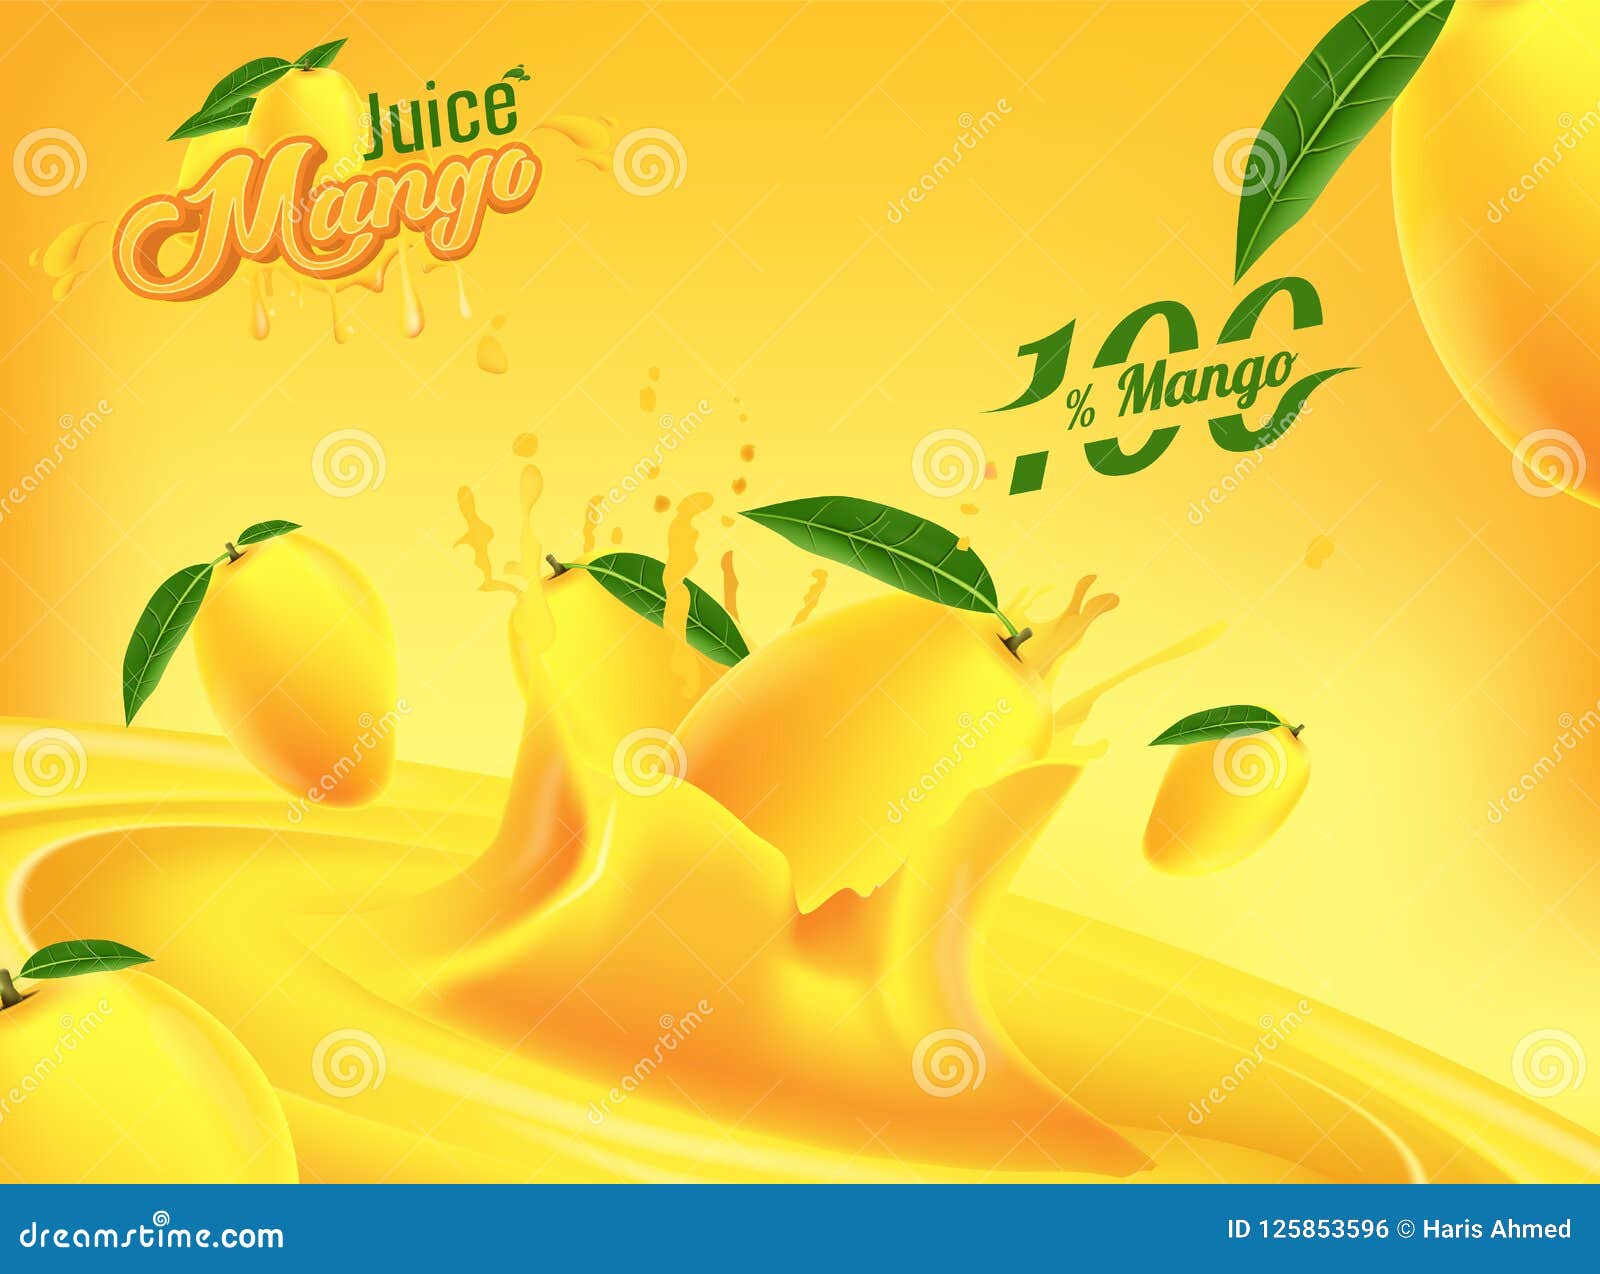 Mango Juice Advertising Banner Ads Vector Template Design Stock Vector -  Illustration of advertisement, healthy: 125853596